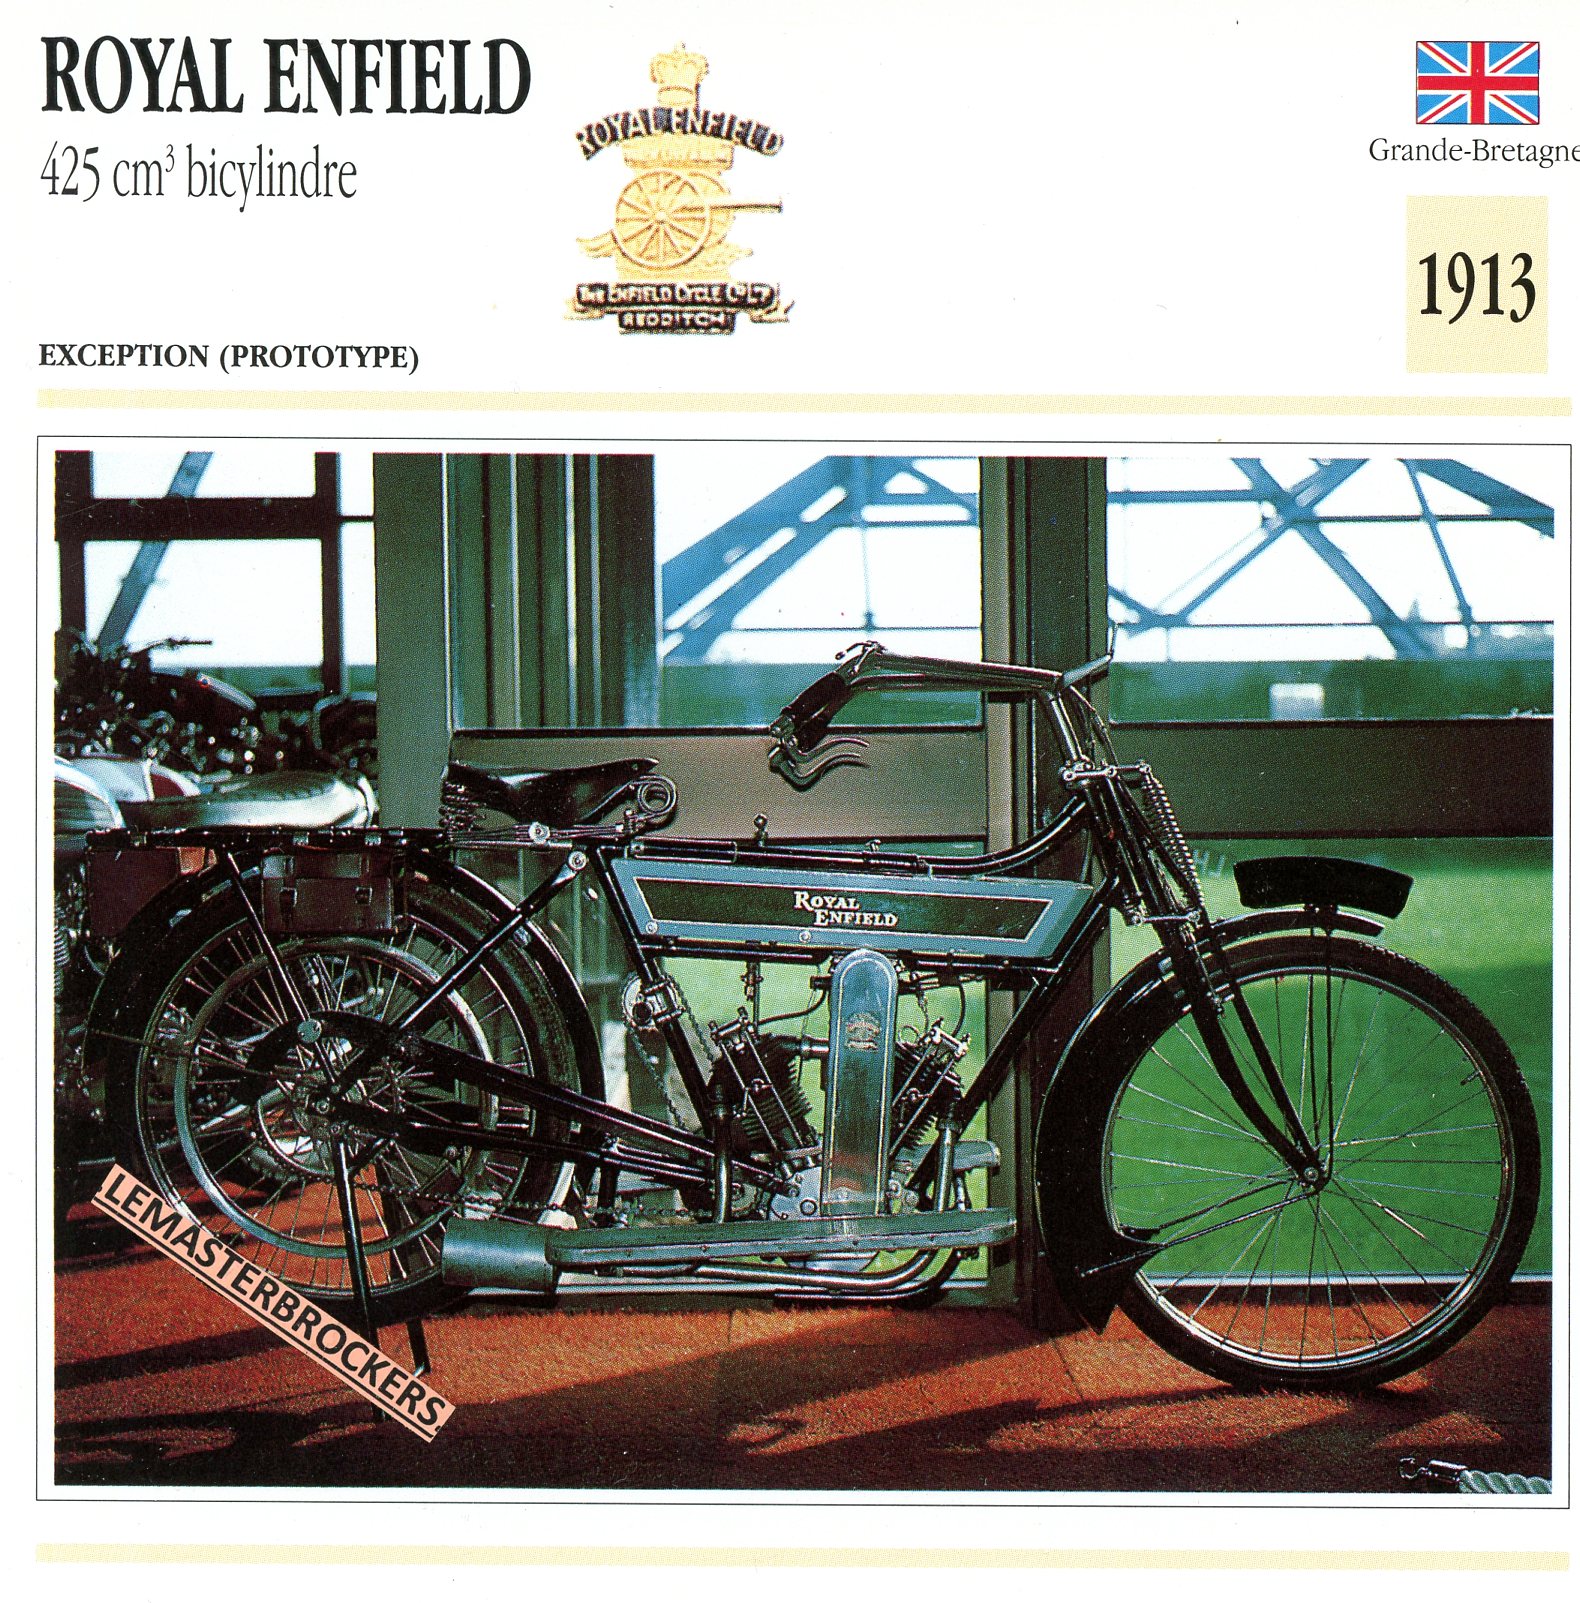 ROYAL ENFIELD 425 BICYLINDRE 1913 - FICHE MOTO